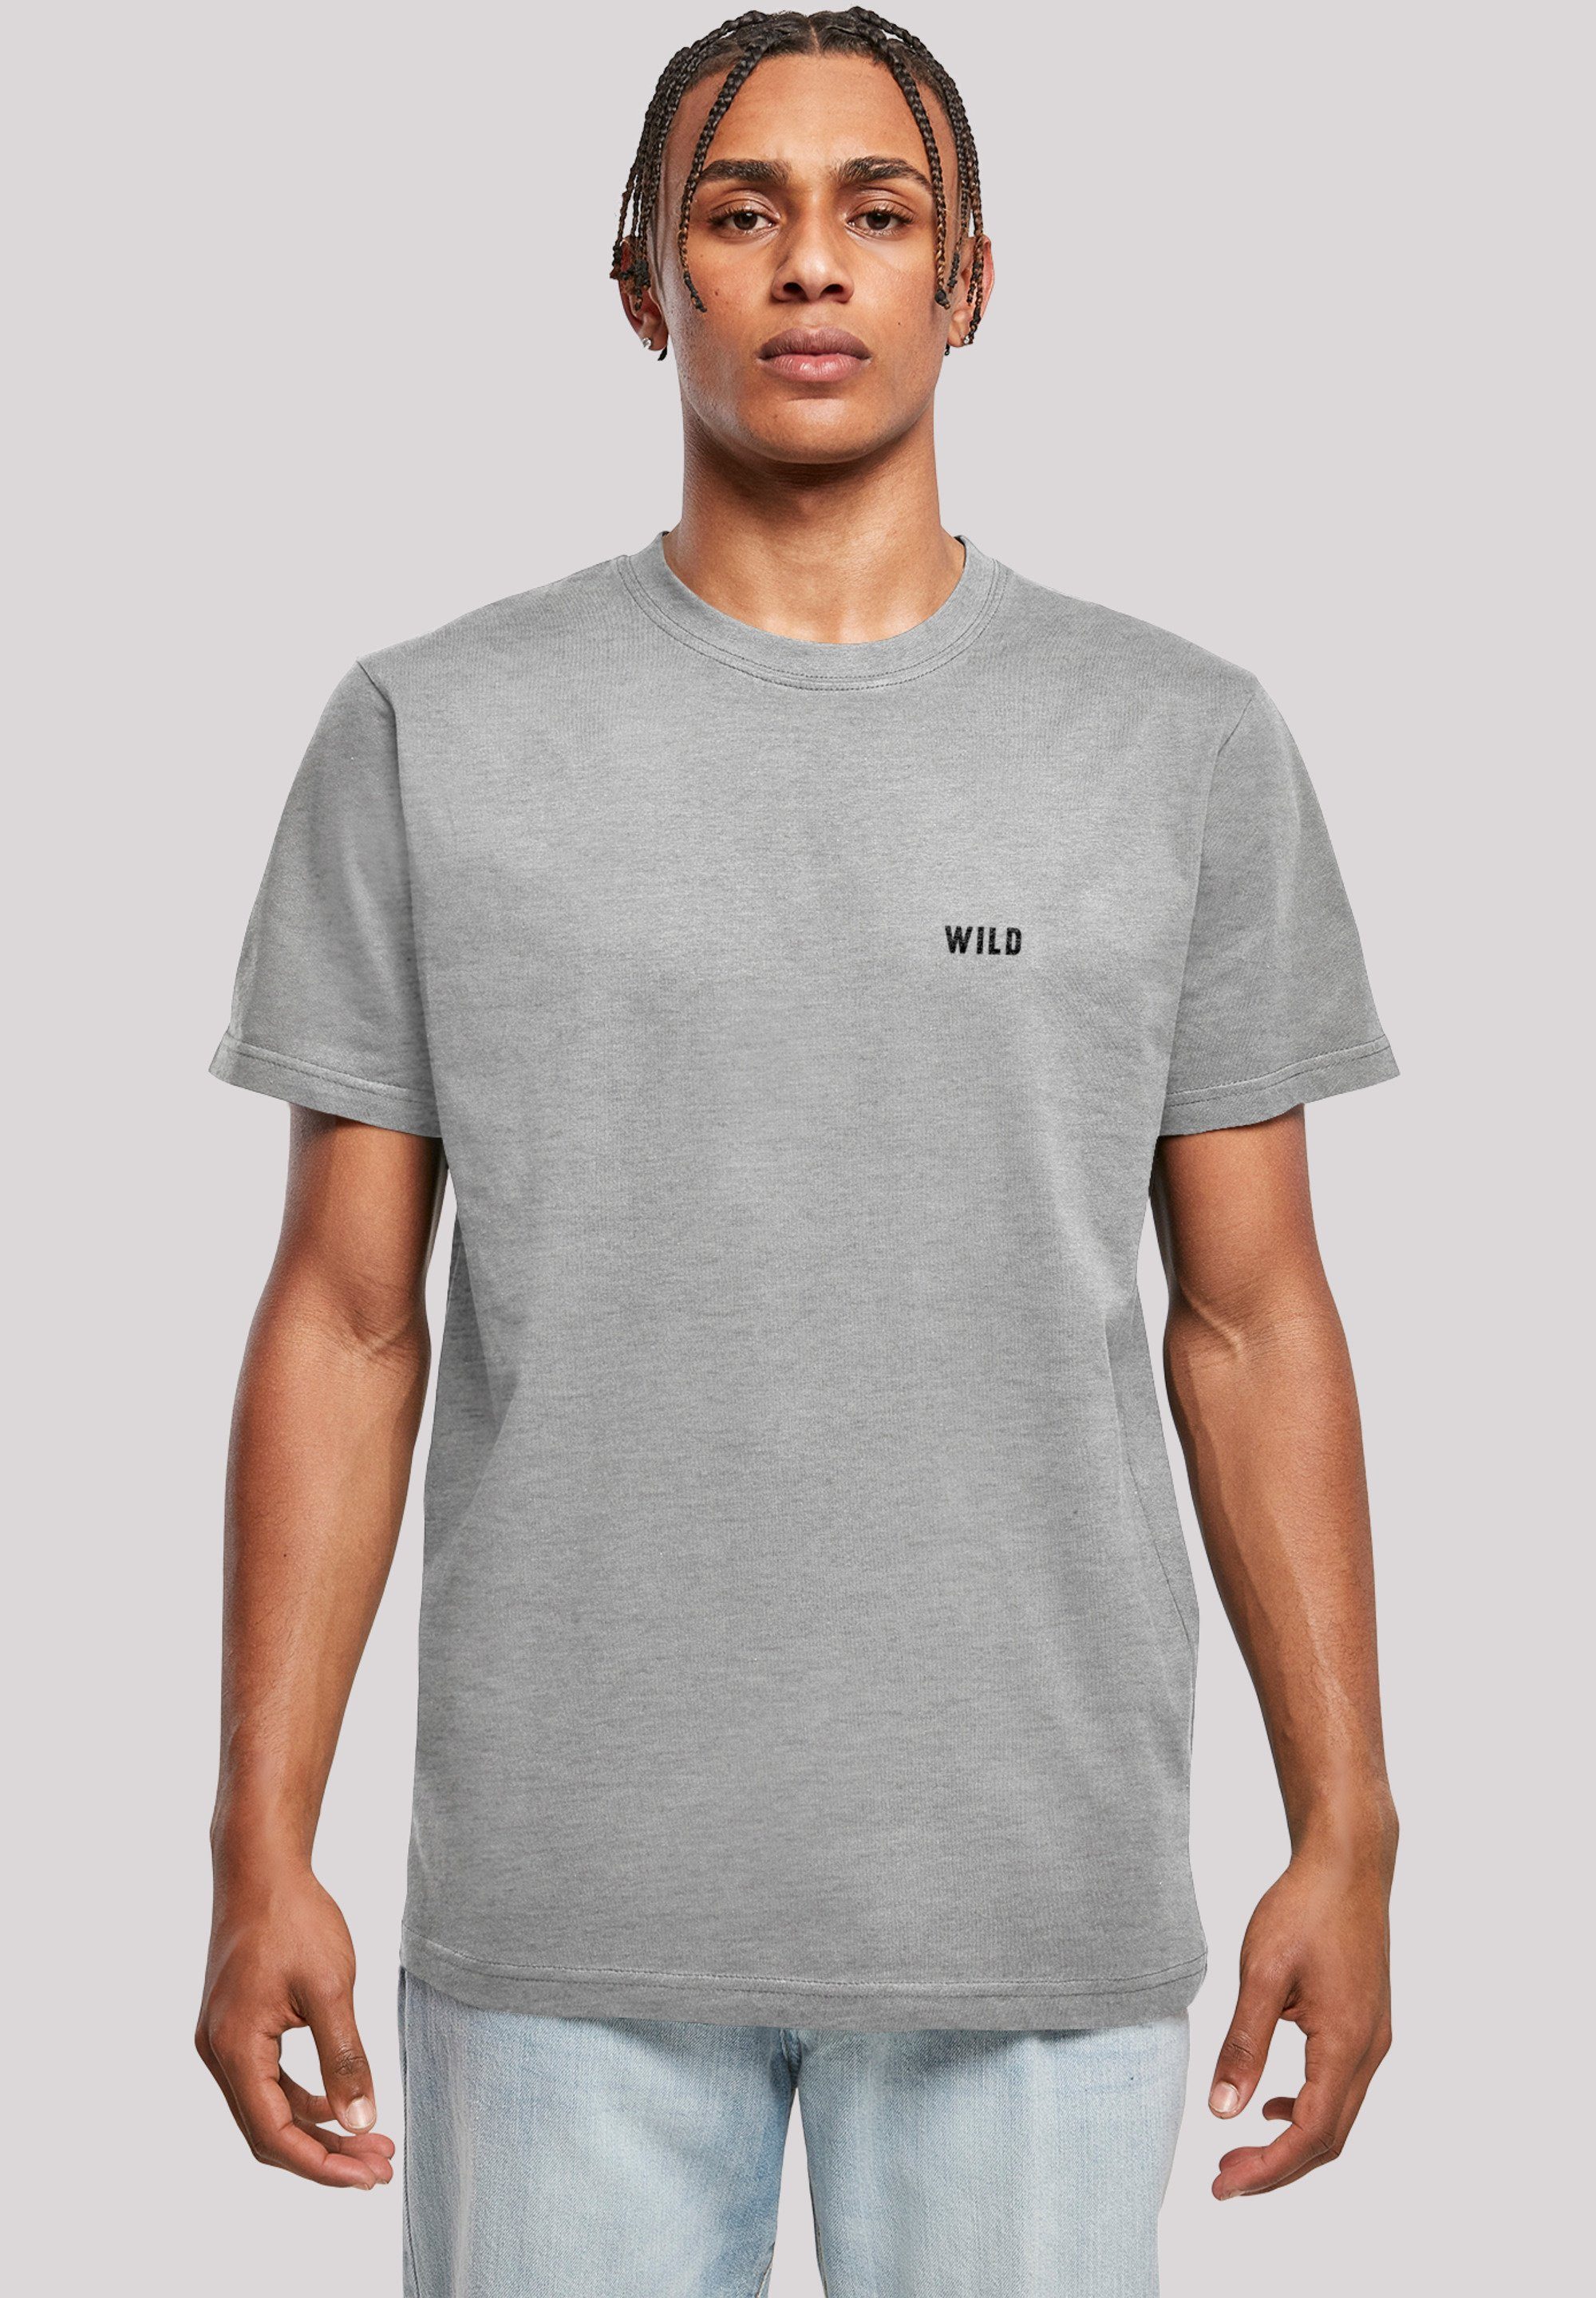 F4NT4STIC Wild grey slang heather T-Shirt 2022, Jugendwort